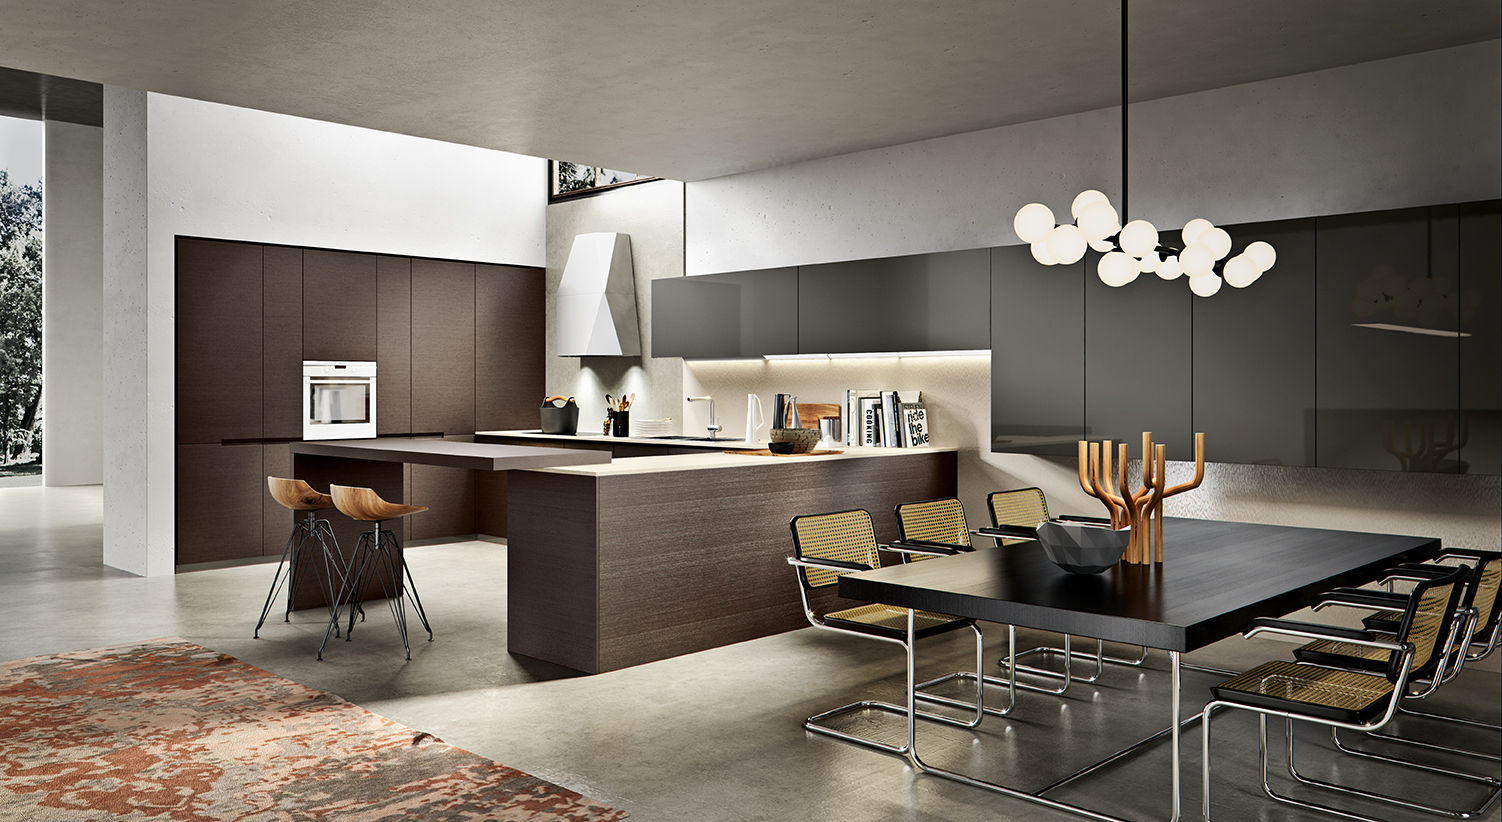 ARENA Kitchen by Maistri ALP Home Modern Kitchen Cabinets & shelves